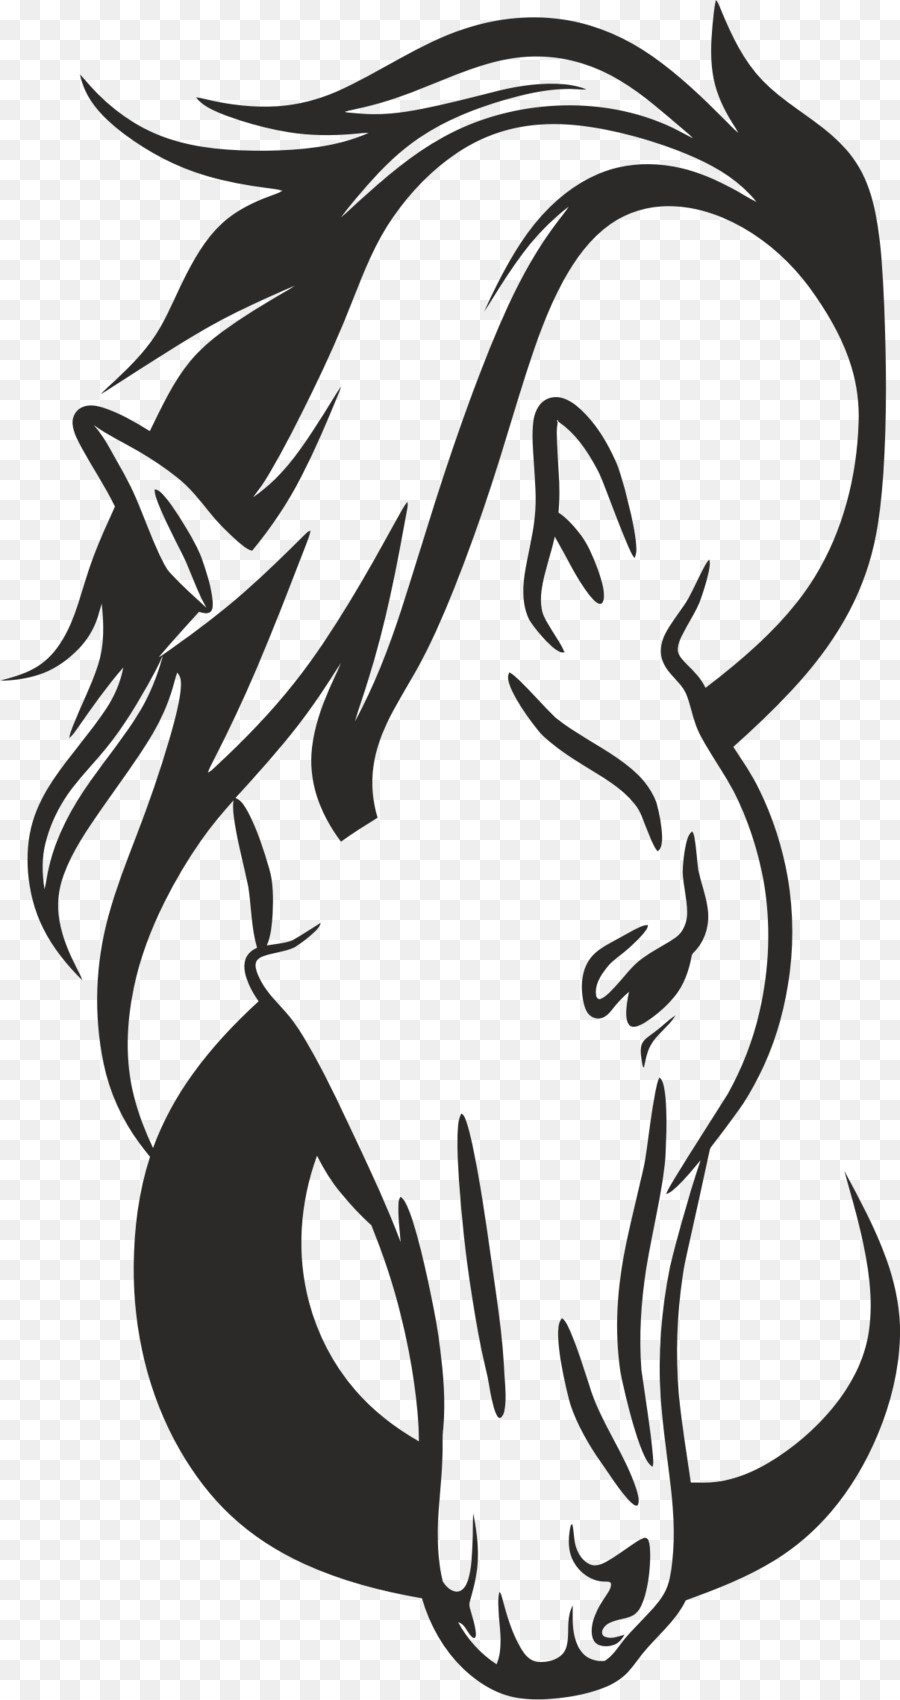 Arabian horse Stallion Silhouette Clip art - file vector png download - 1206*2278 - Free Transparent Arabian Horse png Download.